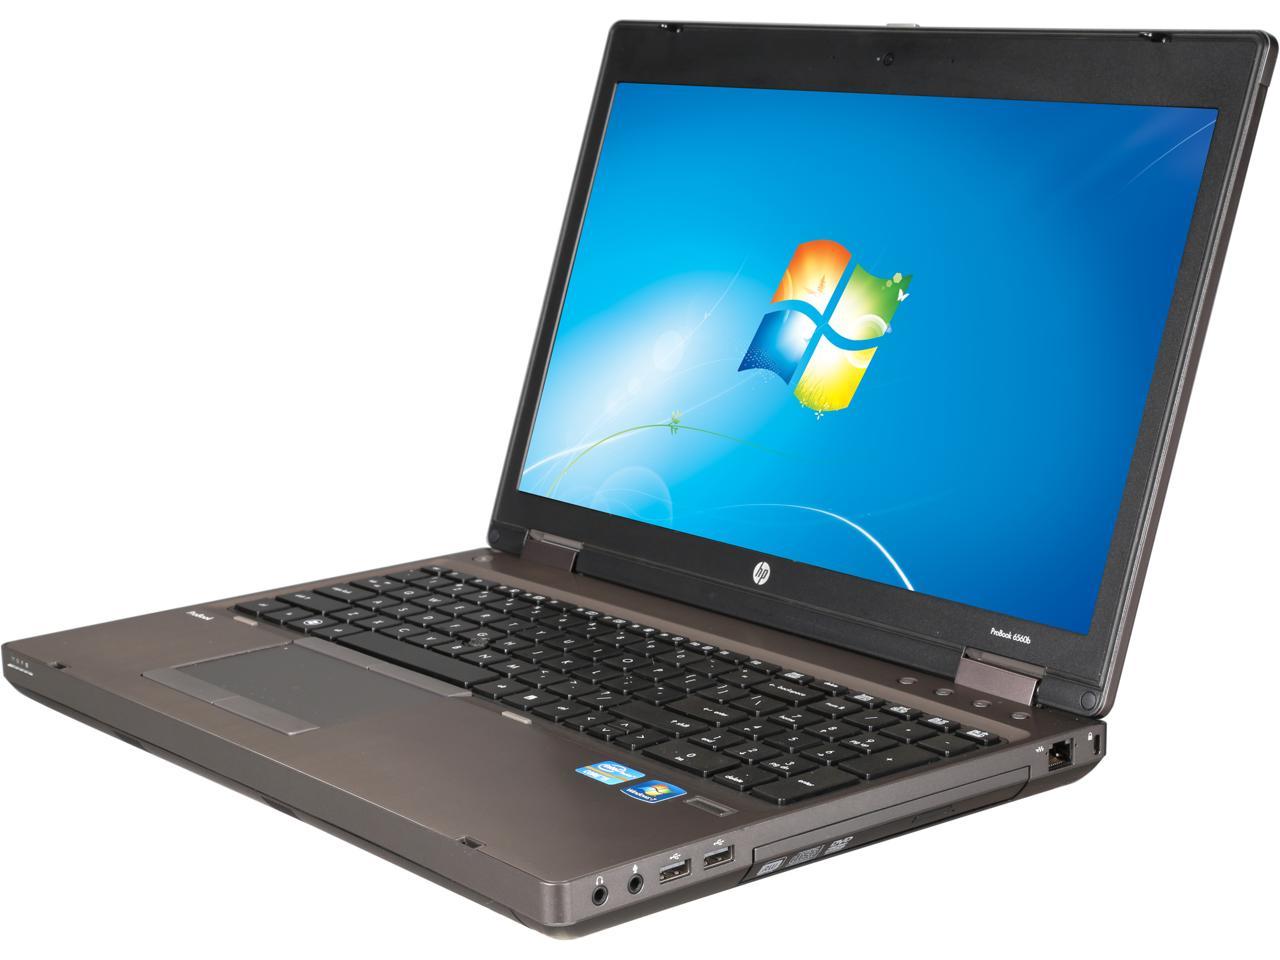 Refurbished Hp Laptop Probook Intel Core I5 2540m 4gb Memory 320gb Hdd Intel Hd Graphics 3000 6543